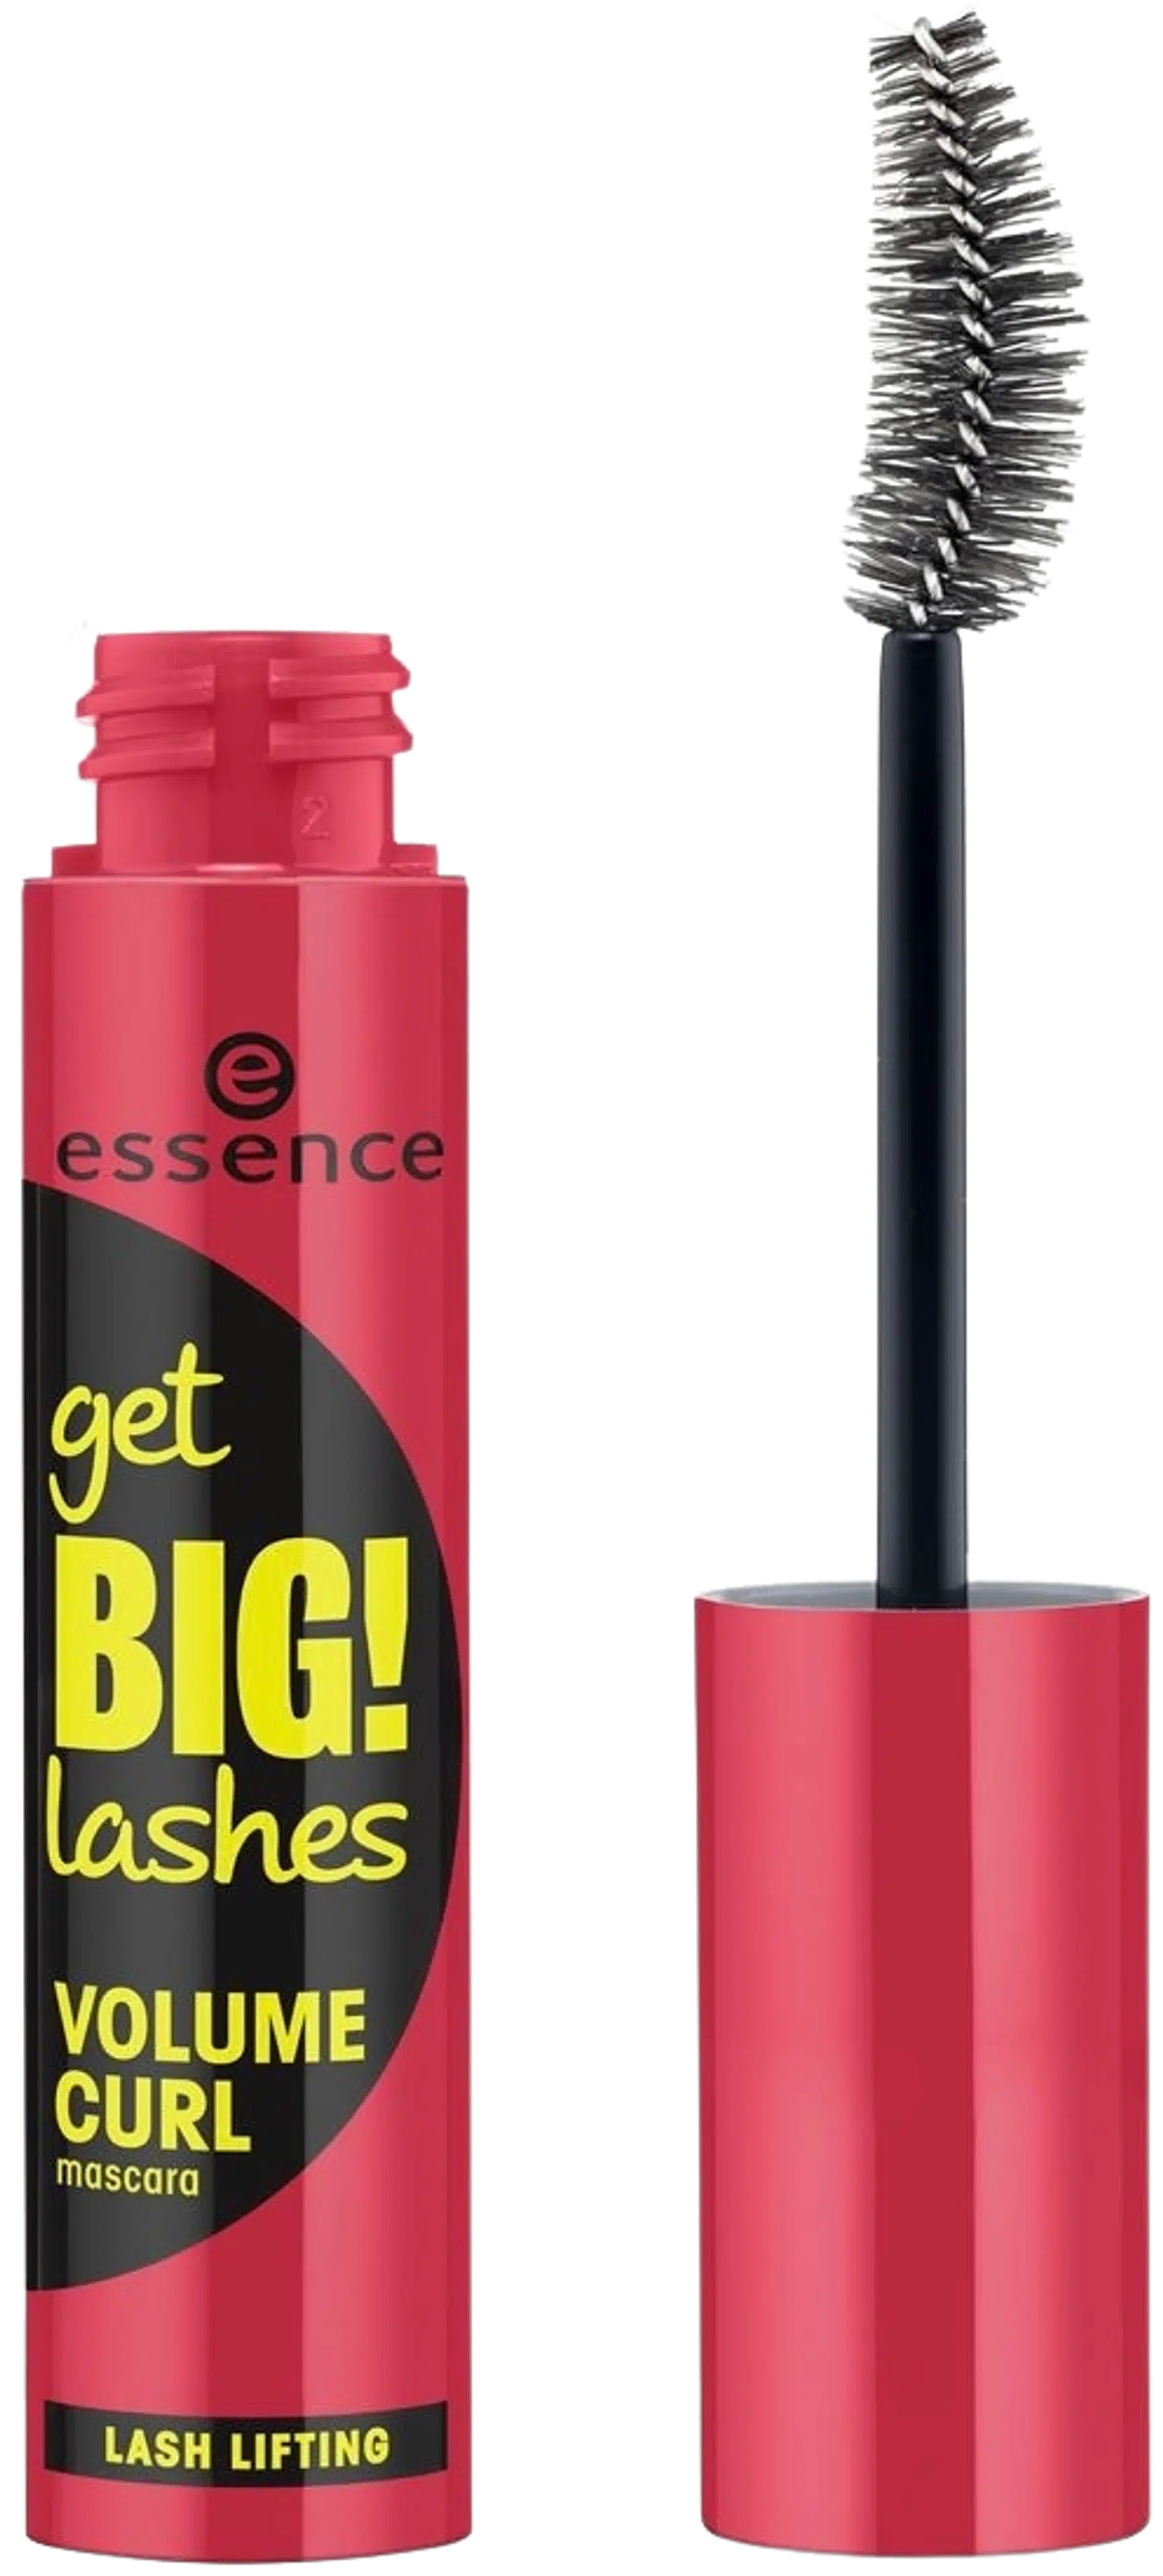 essence get BIG! lashes VOLUME CURL mascara 12 ml